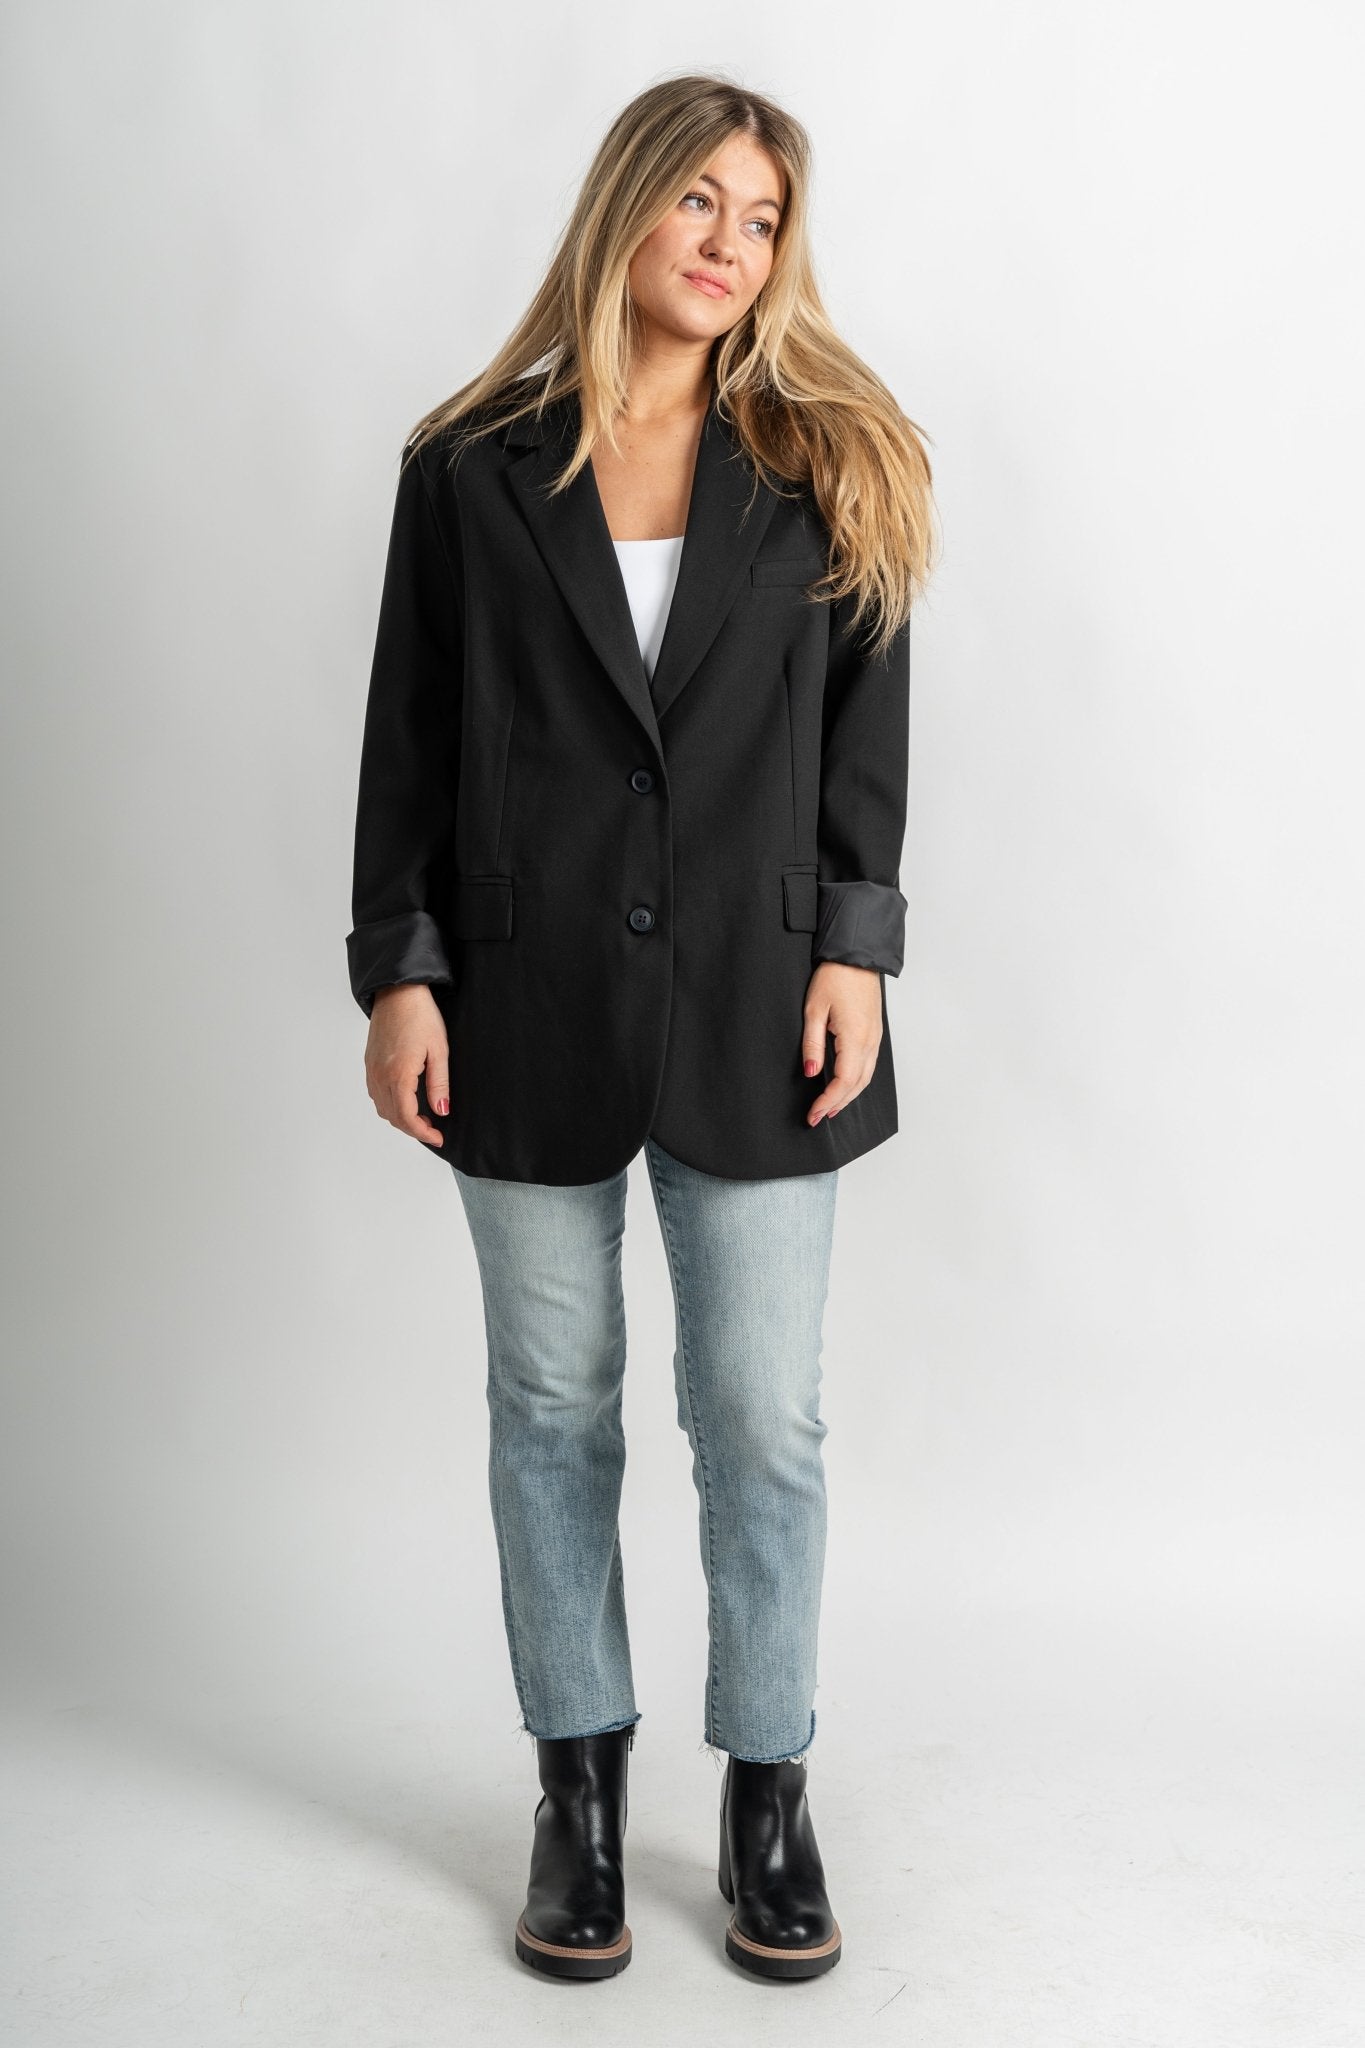 Tommy boyfriend blazer jacket black – Fashionable Jackets | Trendy Blazers at Lush Fashion Lounge Boutique in Oklahoma City